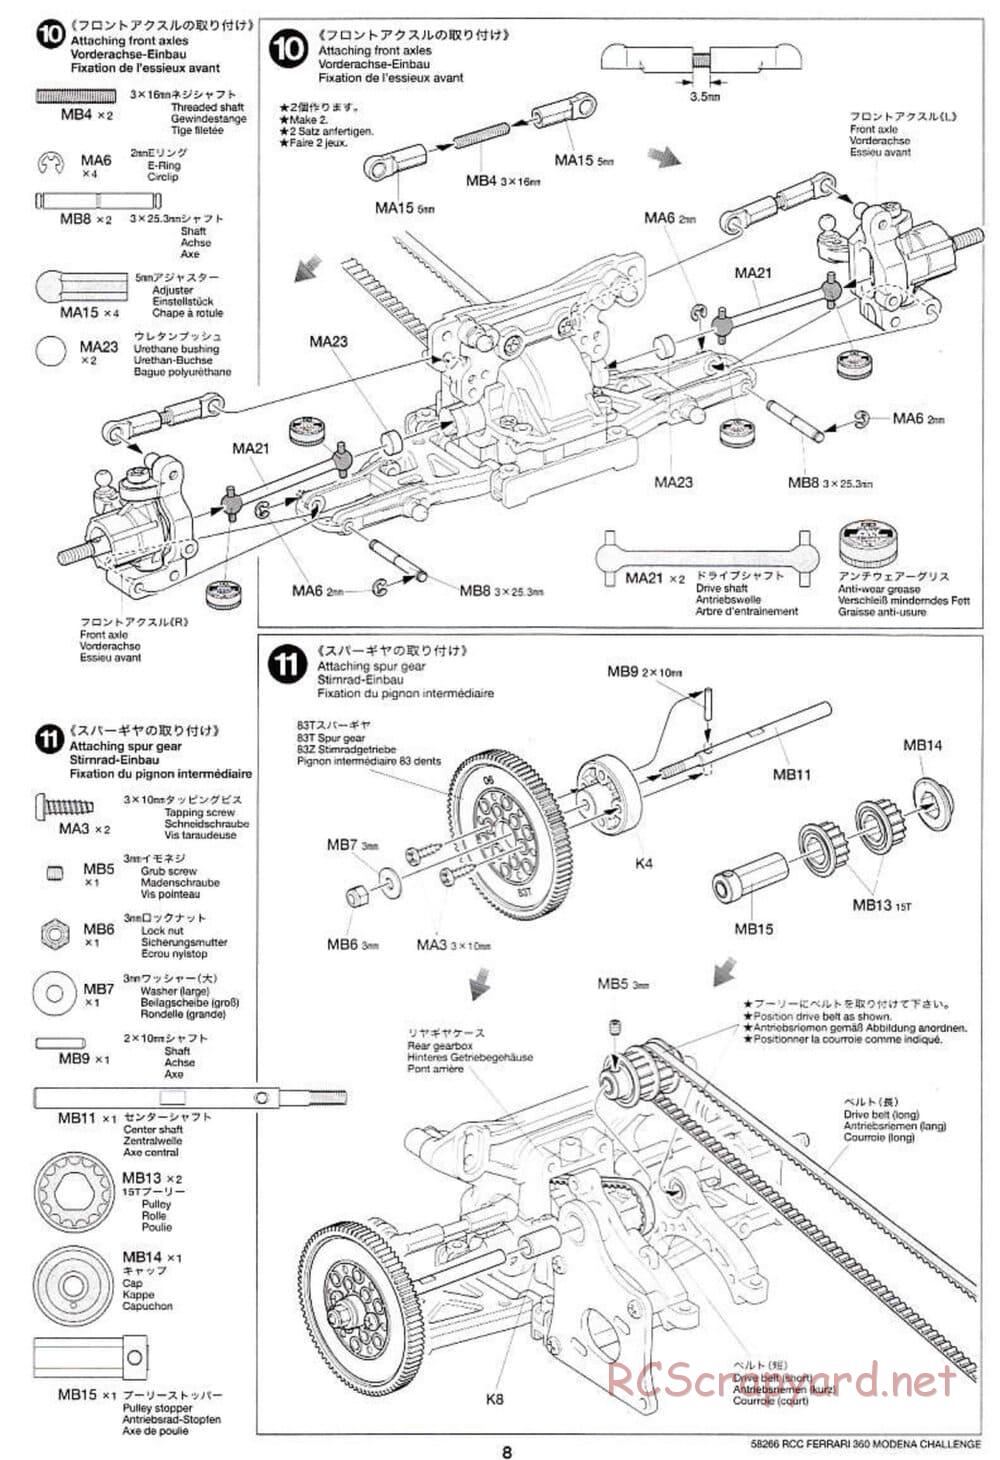 Tamiya - Ferrari 360 Modena Challenge - TA-04 Chassis - Manual - Page 8